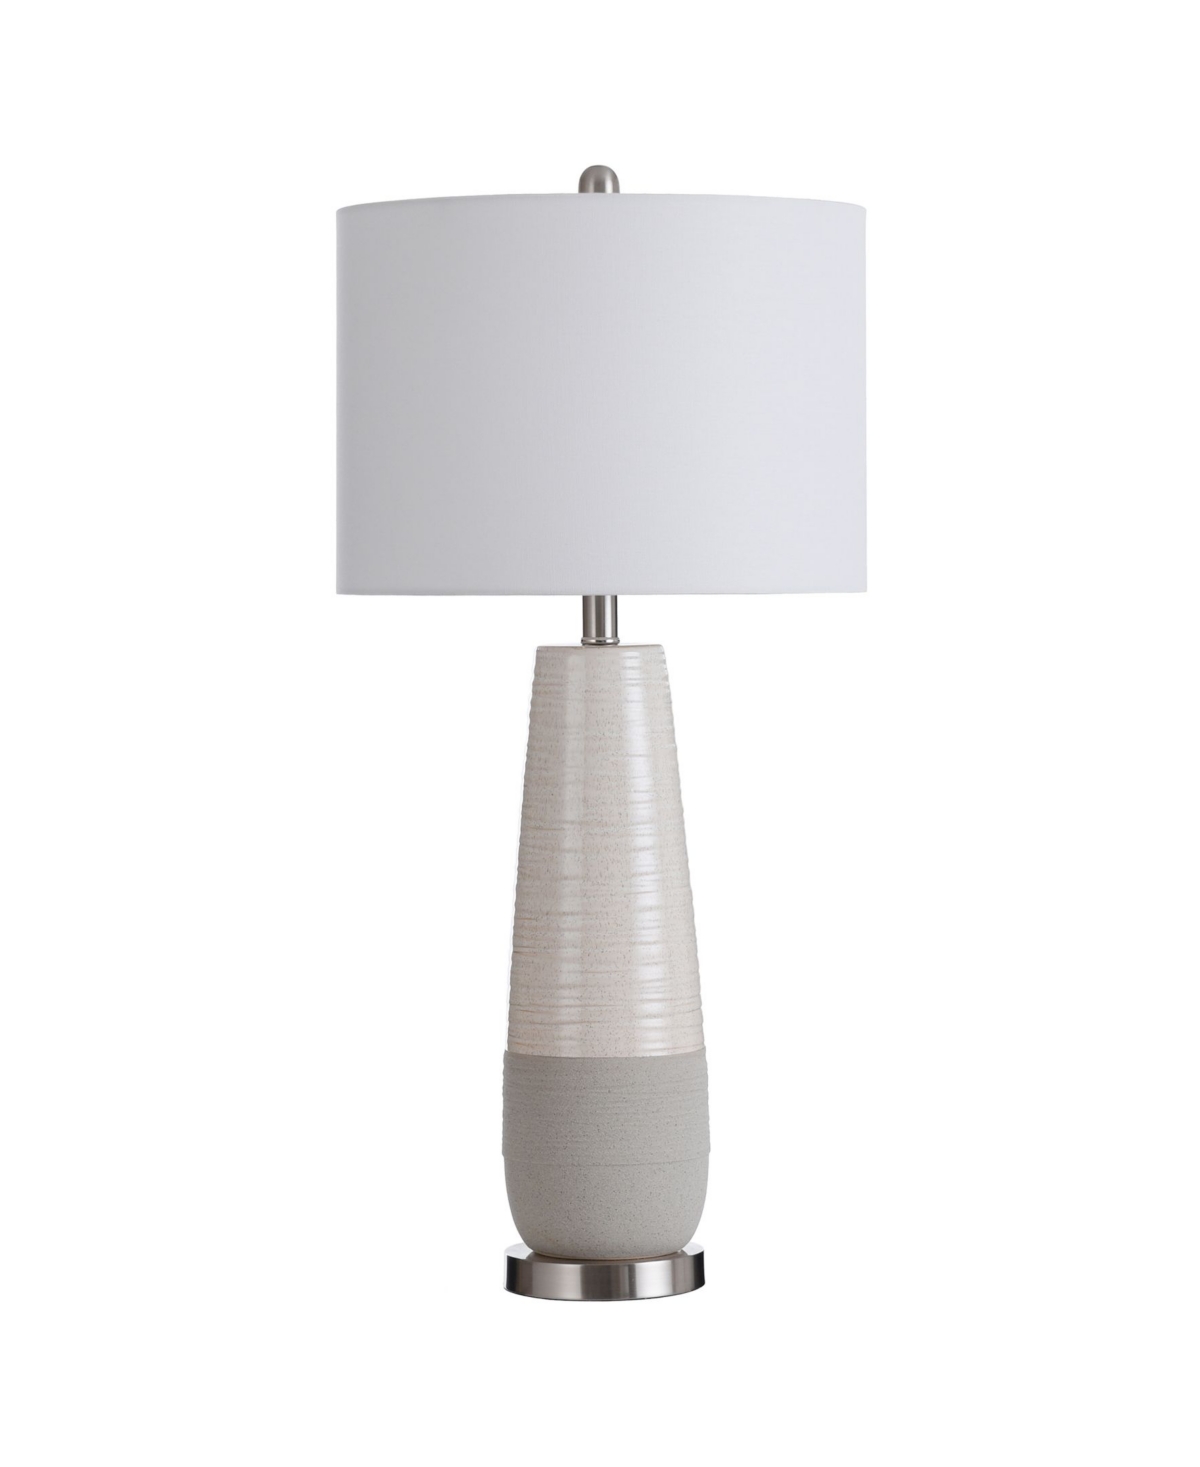 Stylecraft Slightly Tapered 2 Tone Round Ceramic Lamp In White